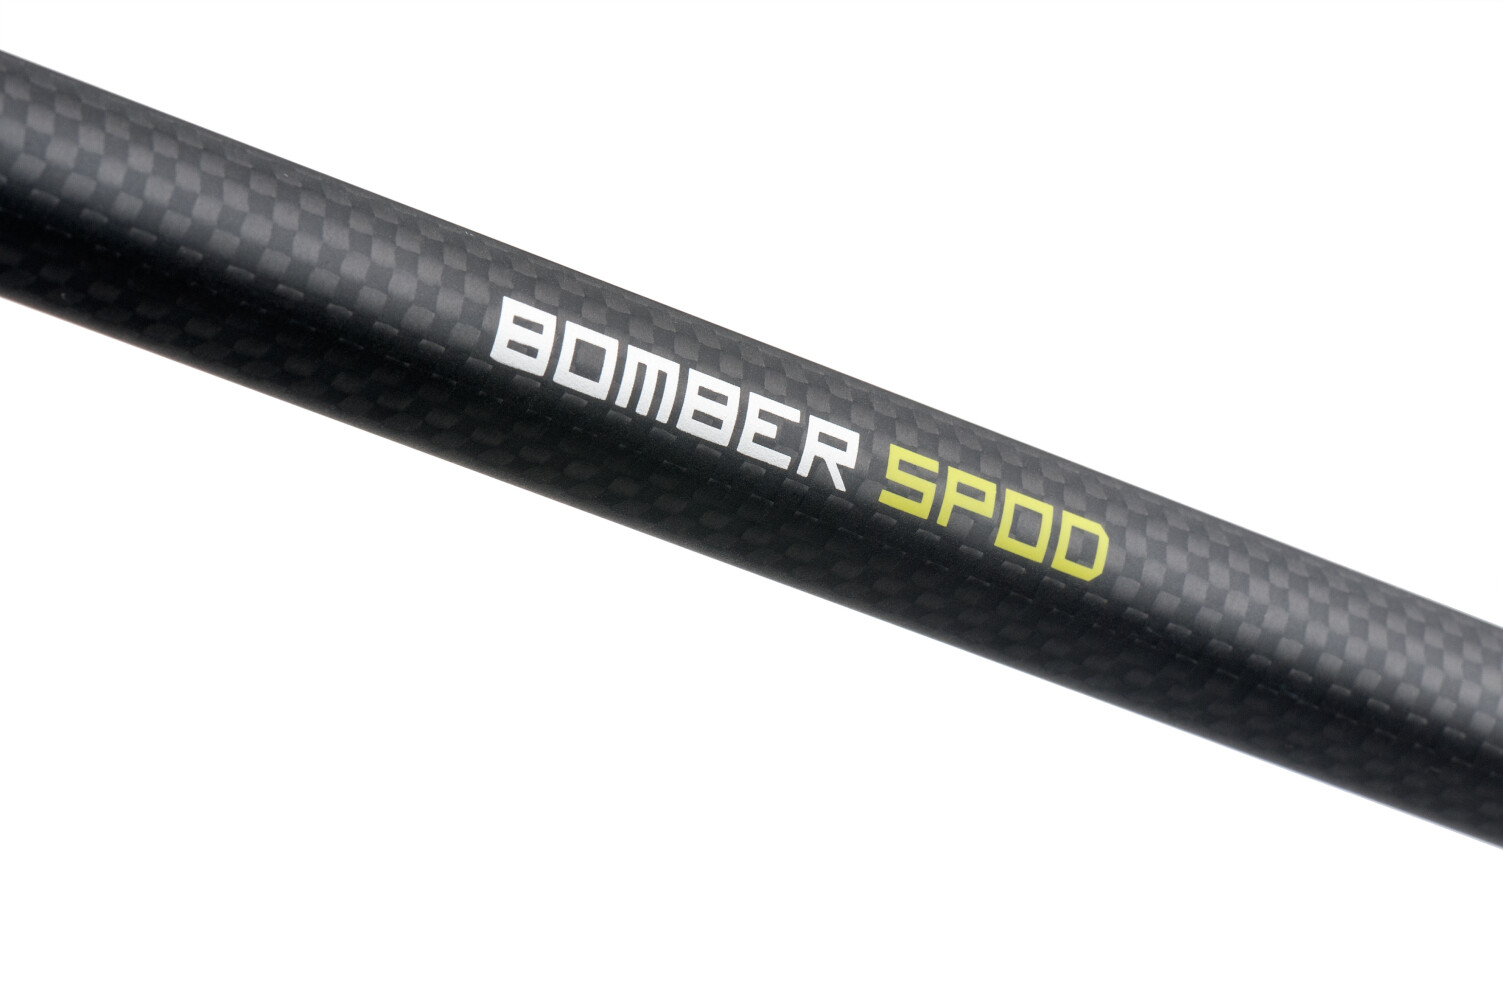 Bomber Spod 390XH